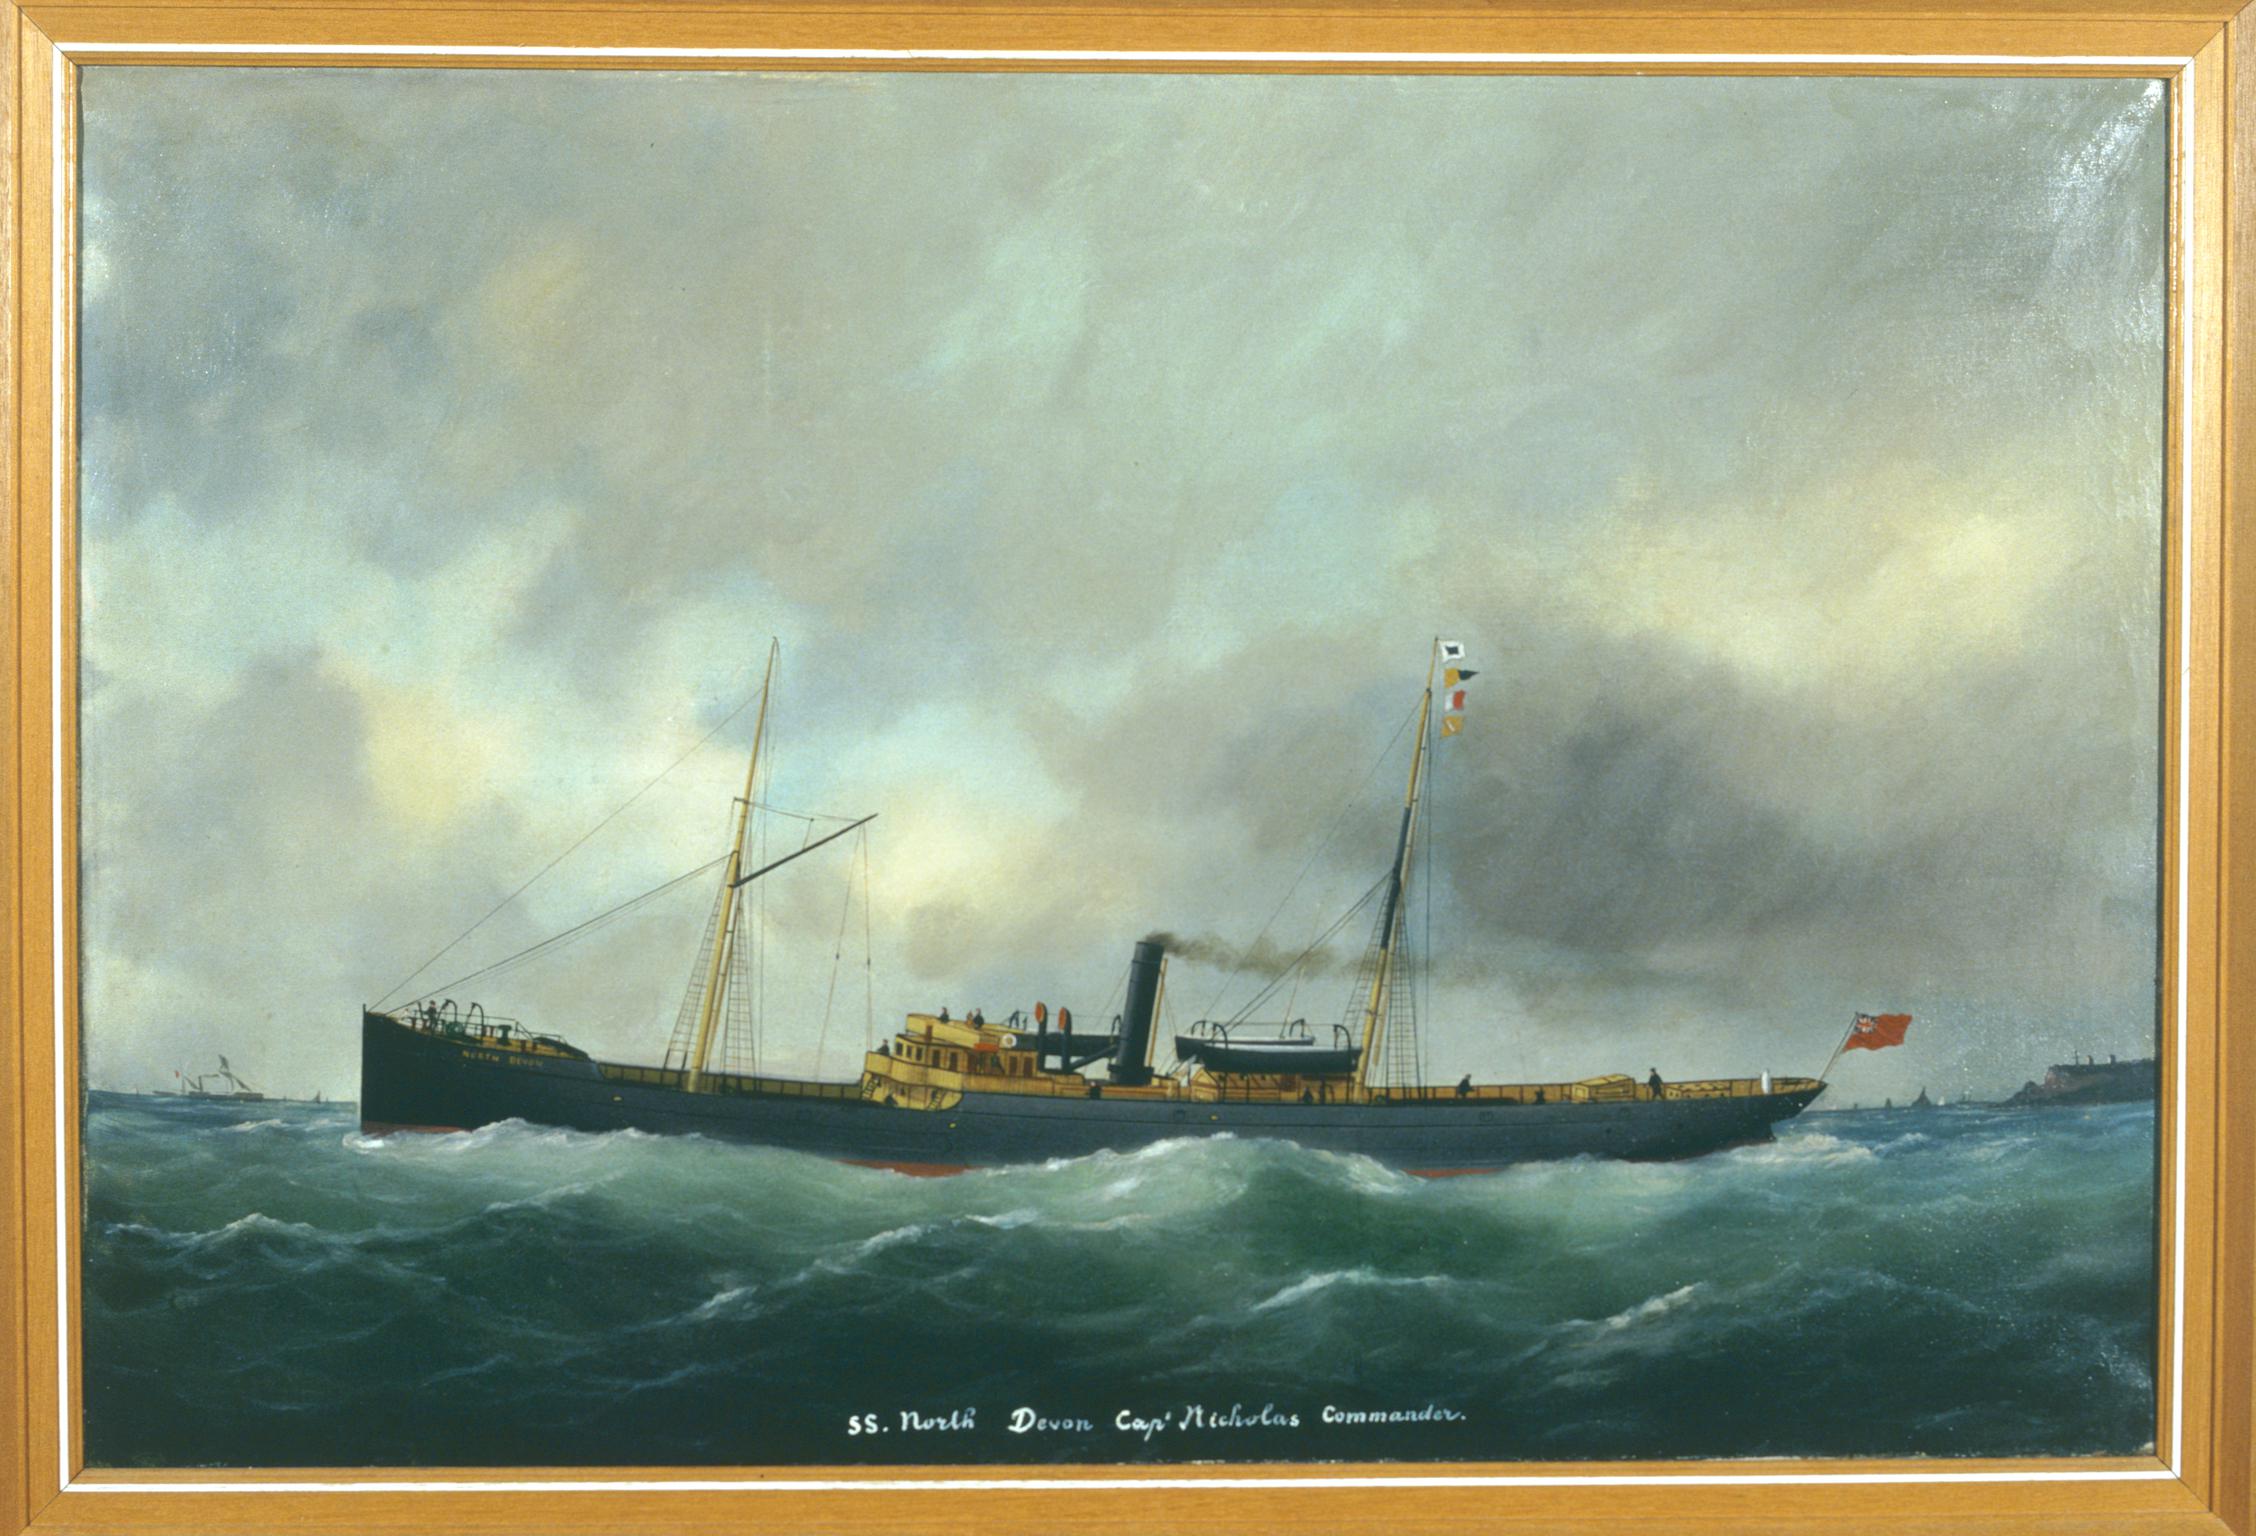 S.S. North Devon Cap. Nicholas Commander (painting